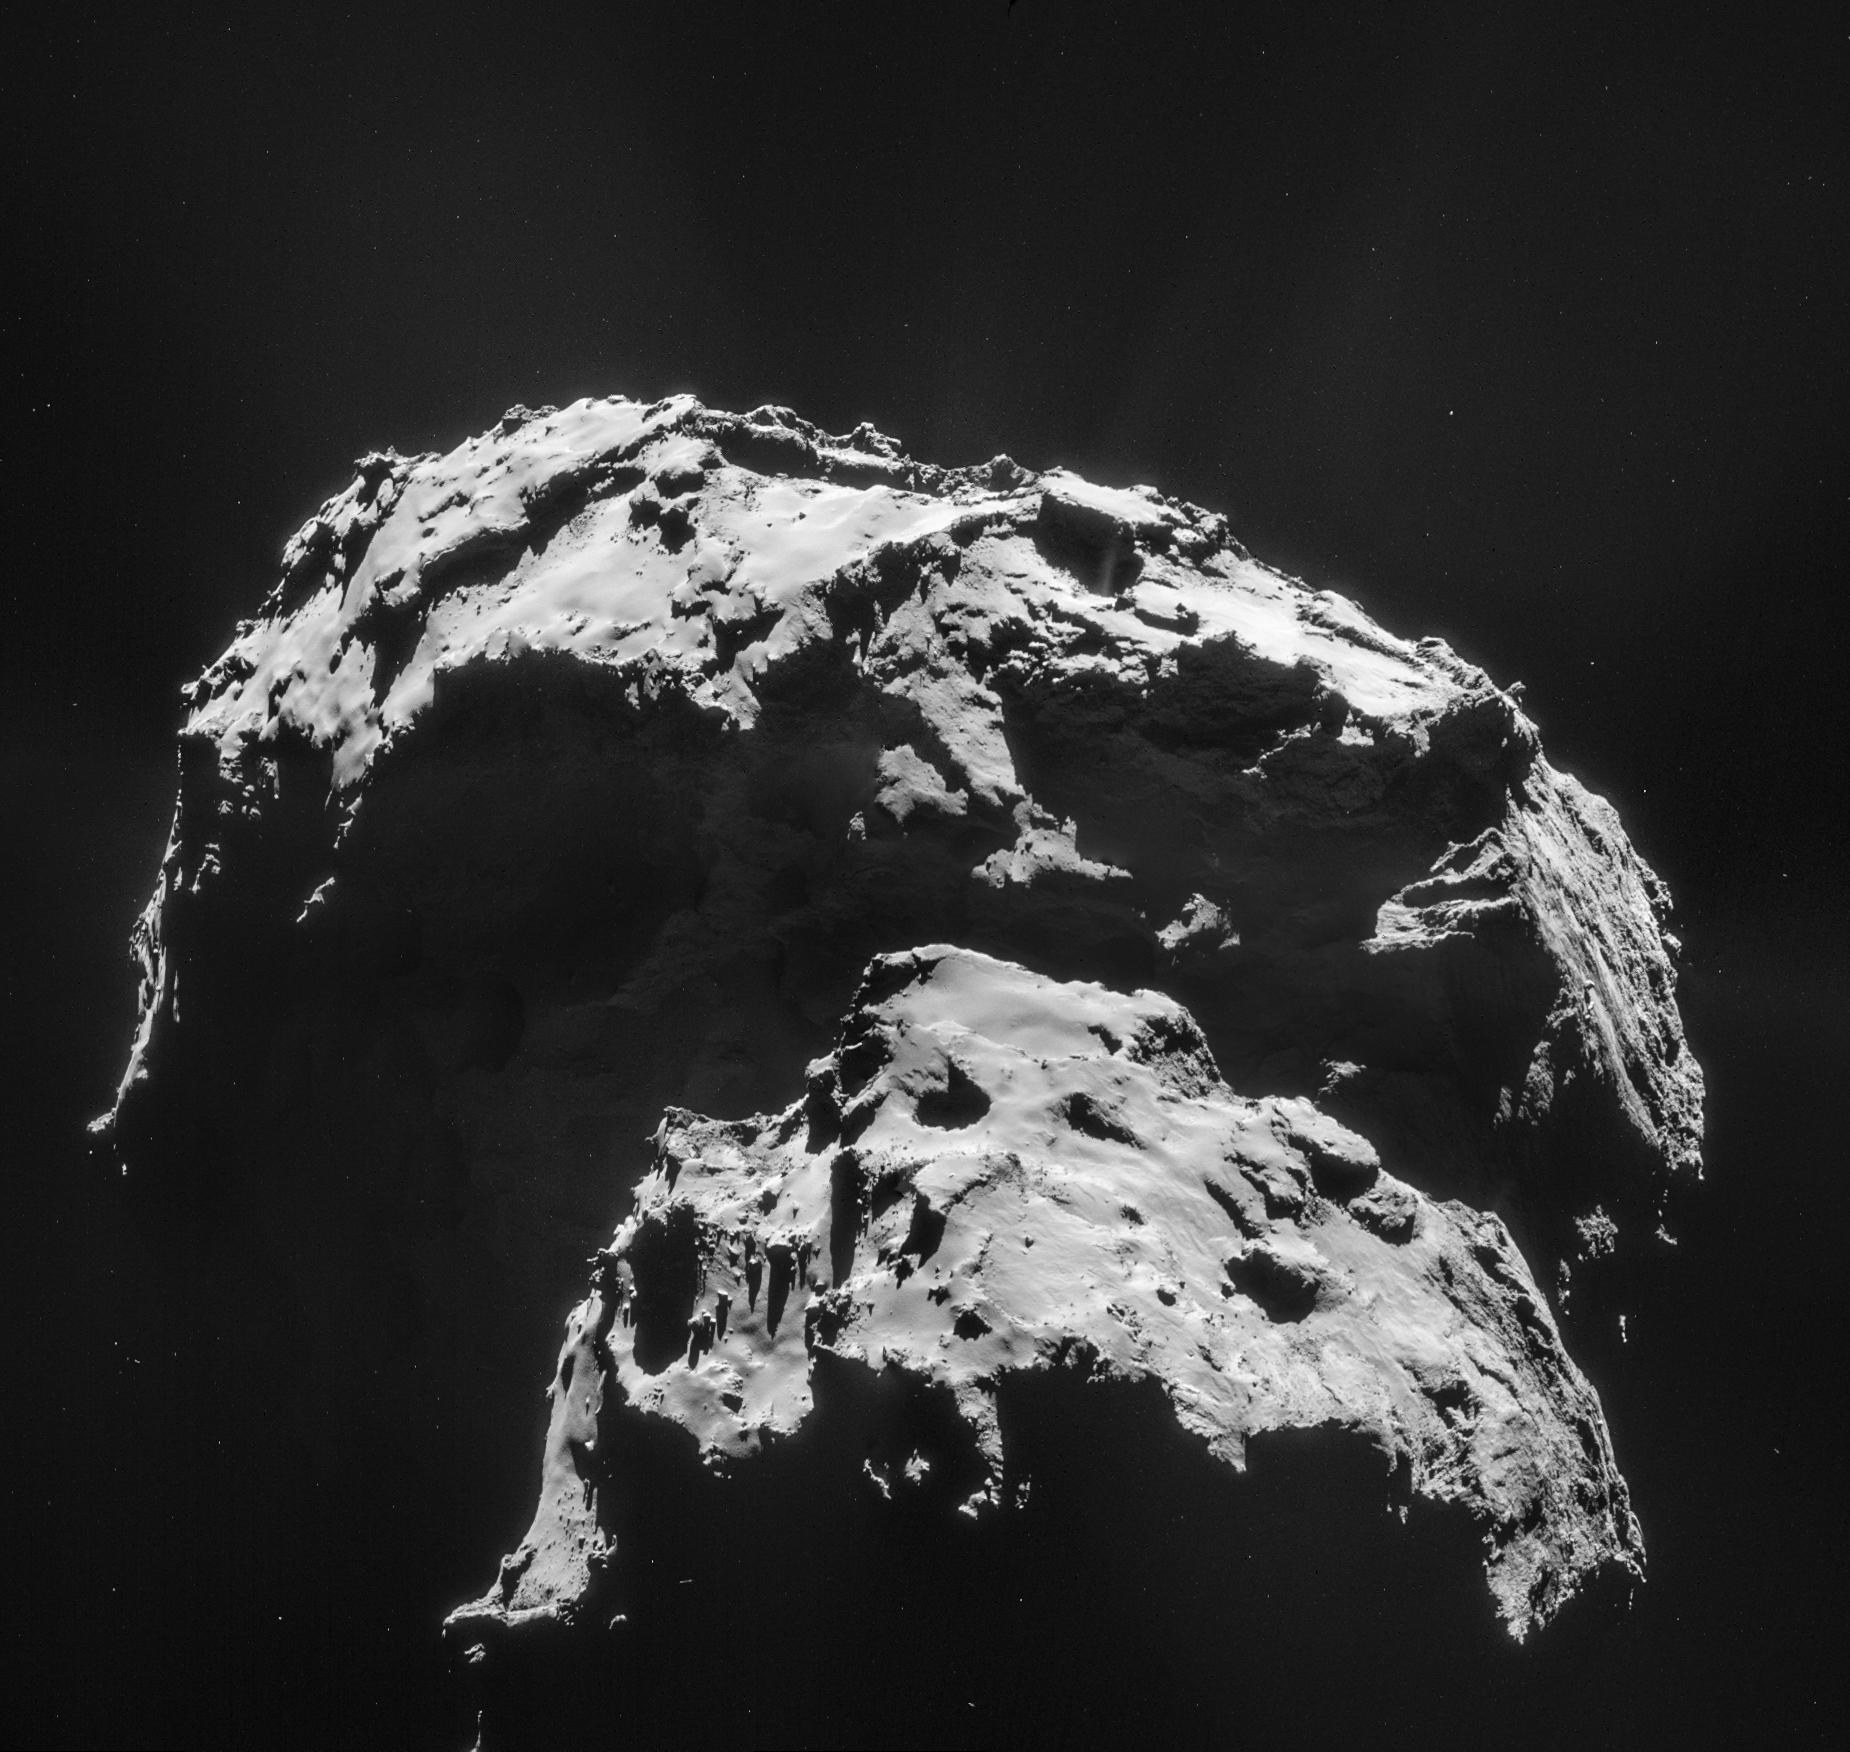 Comet on 21 January 2015